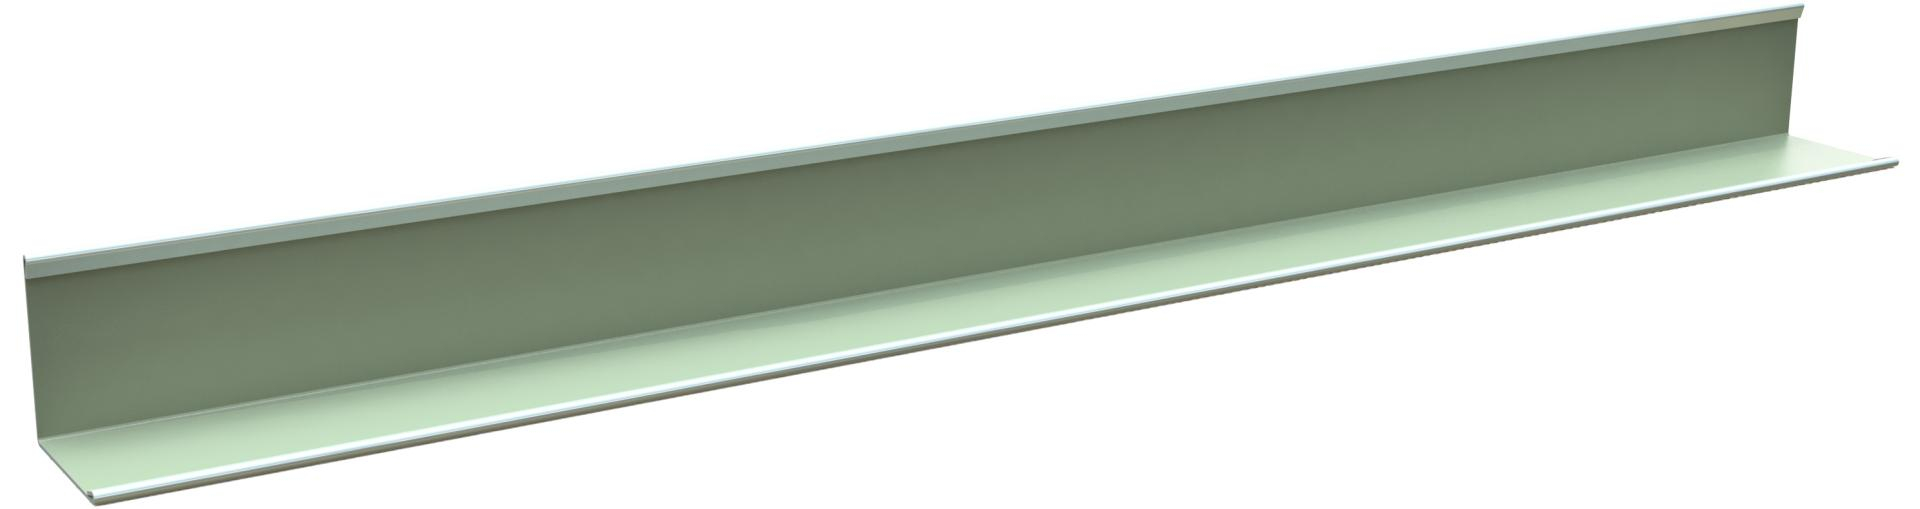 corniere-plafond-24x24-blanc-milieu-humide-3050mm-170580-0